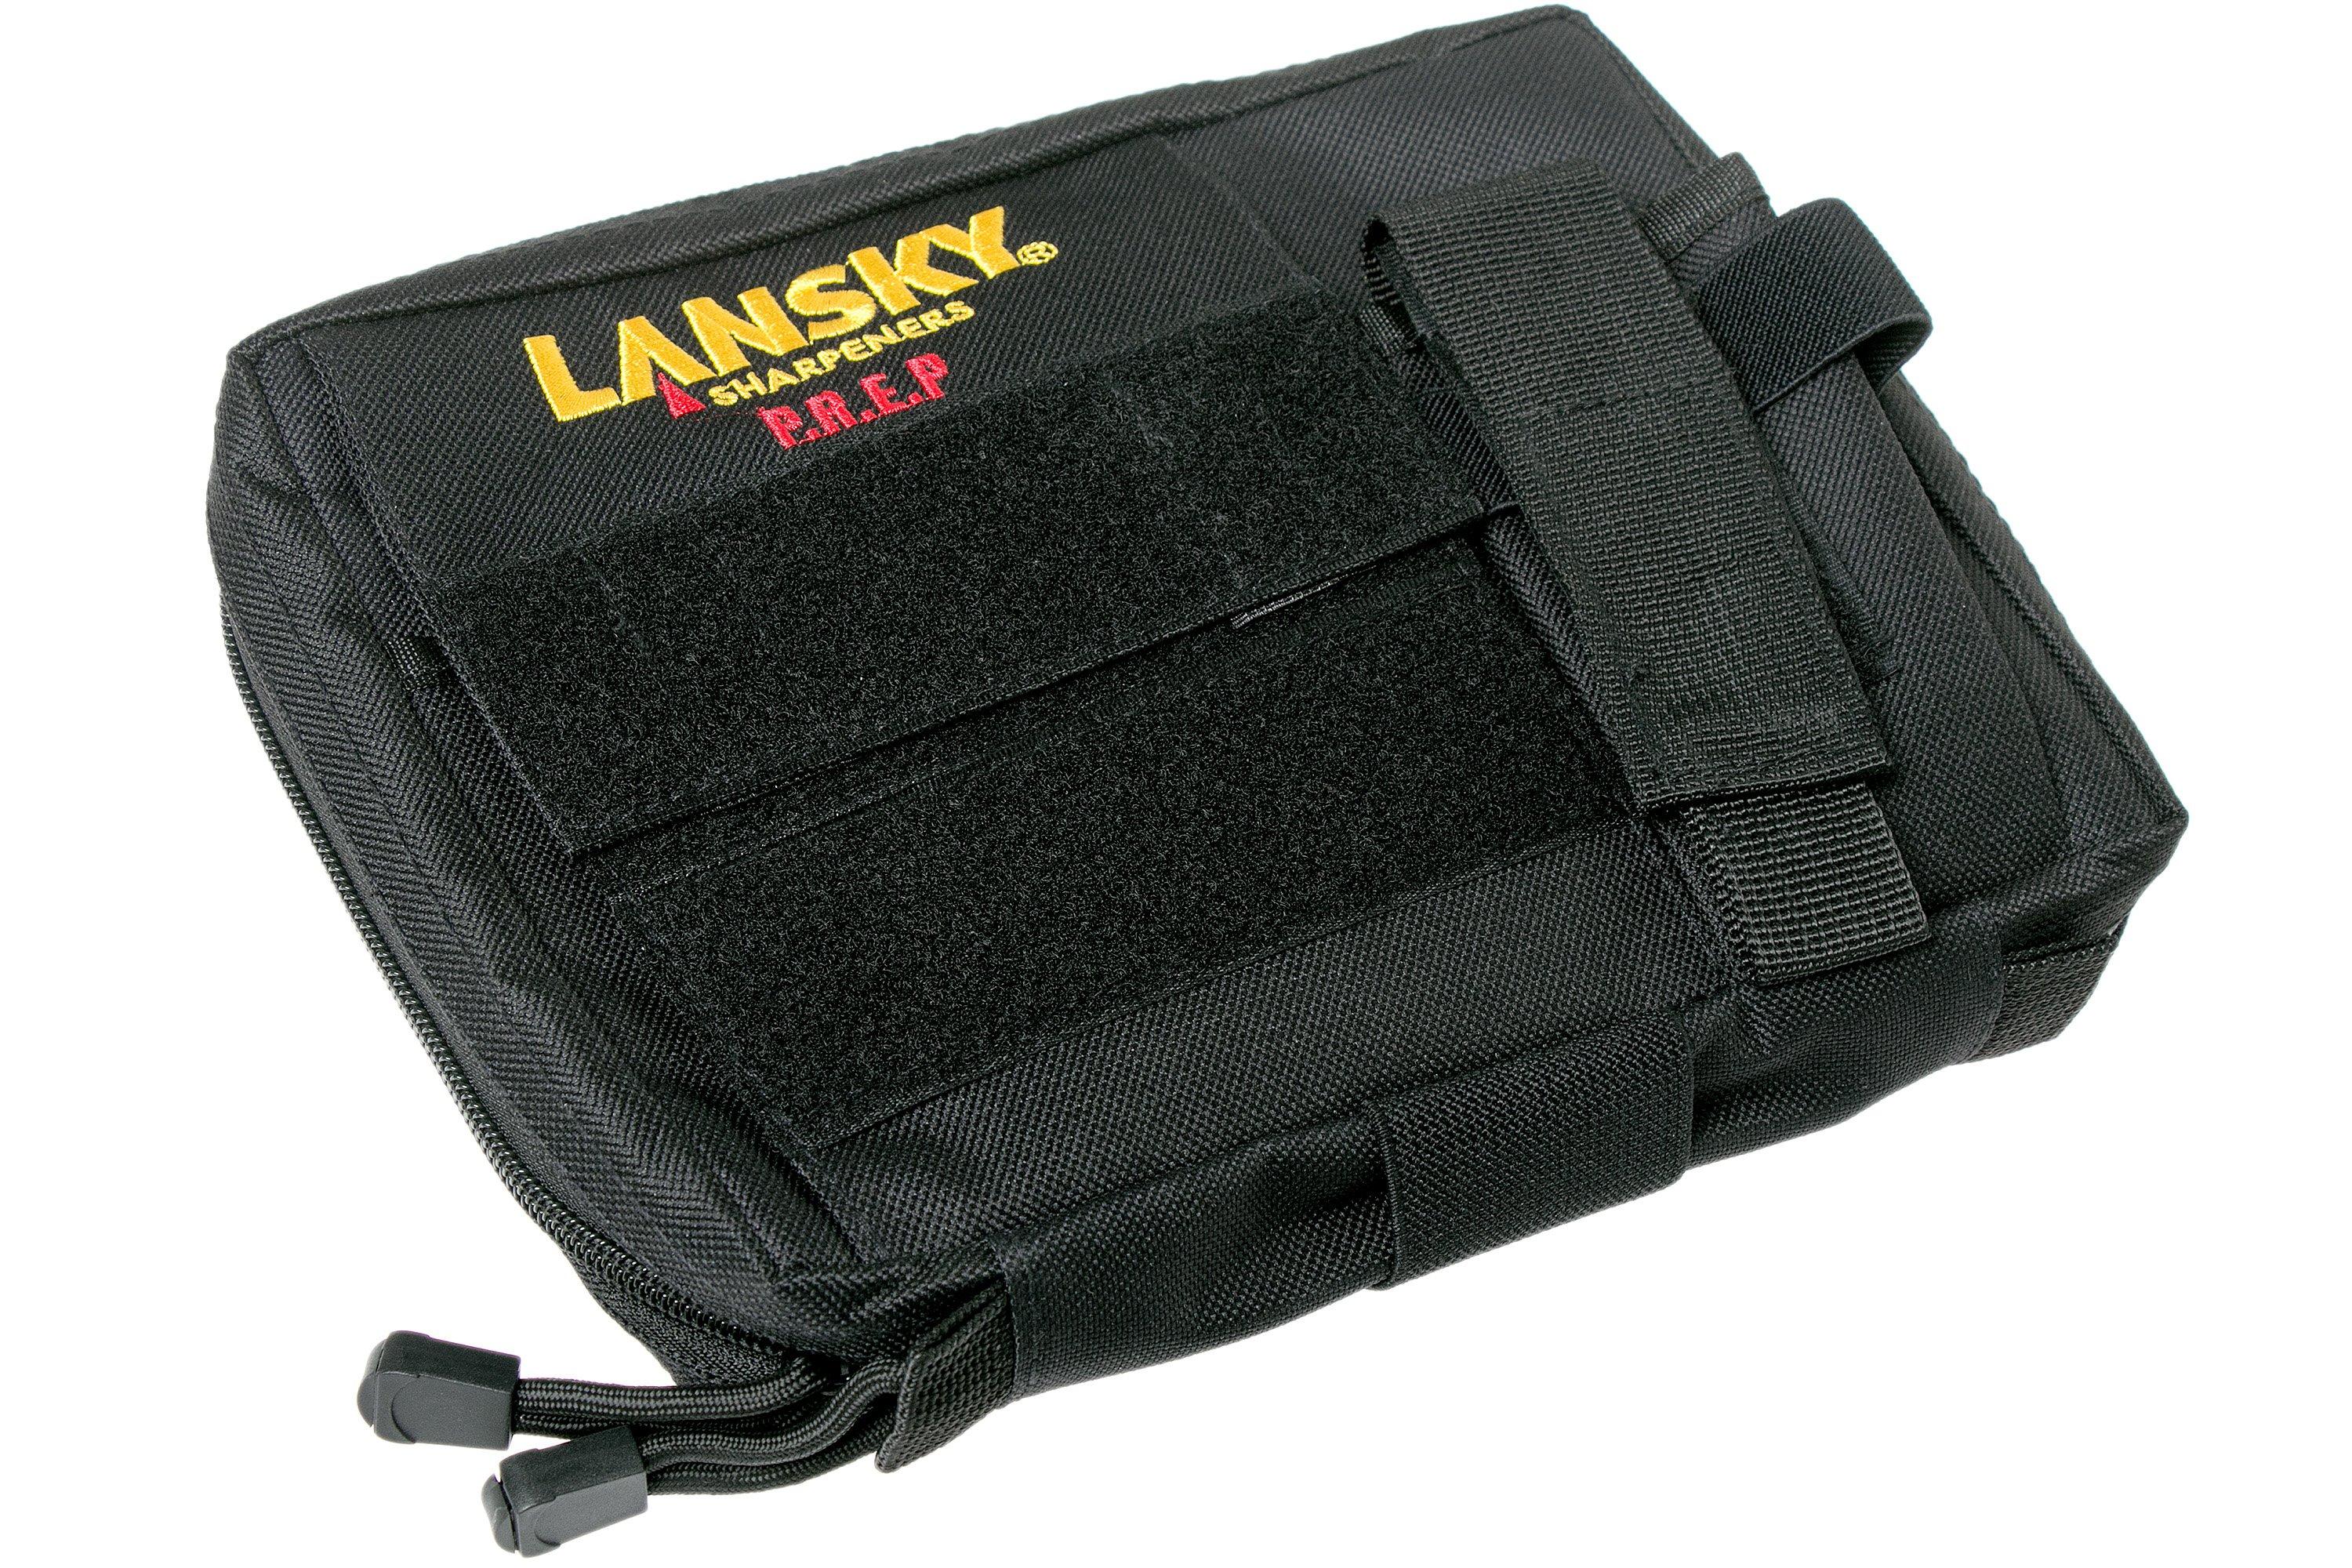 Lansky P.R.E.P. Survival Pack  Advantageously shopping at